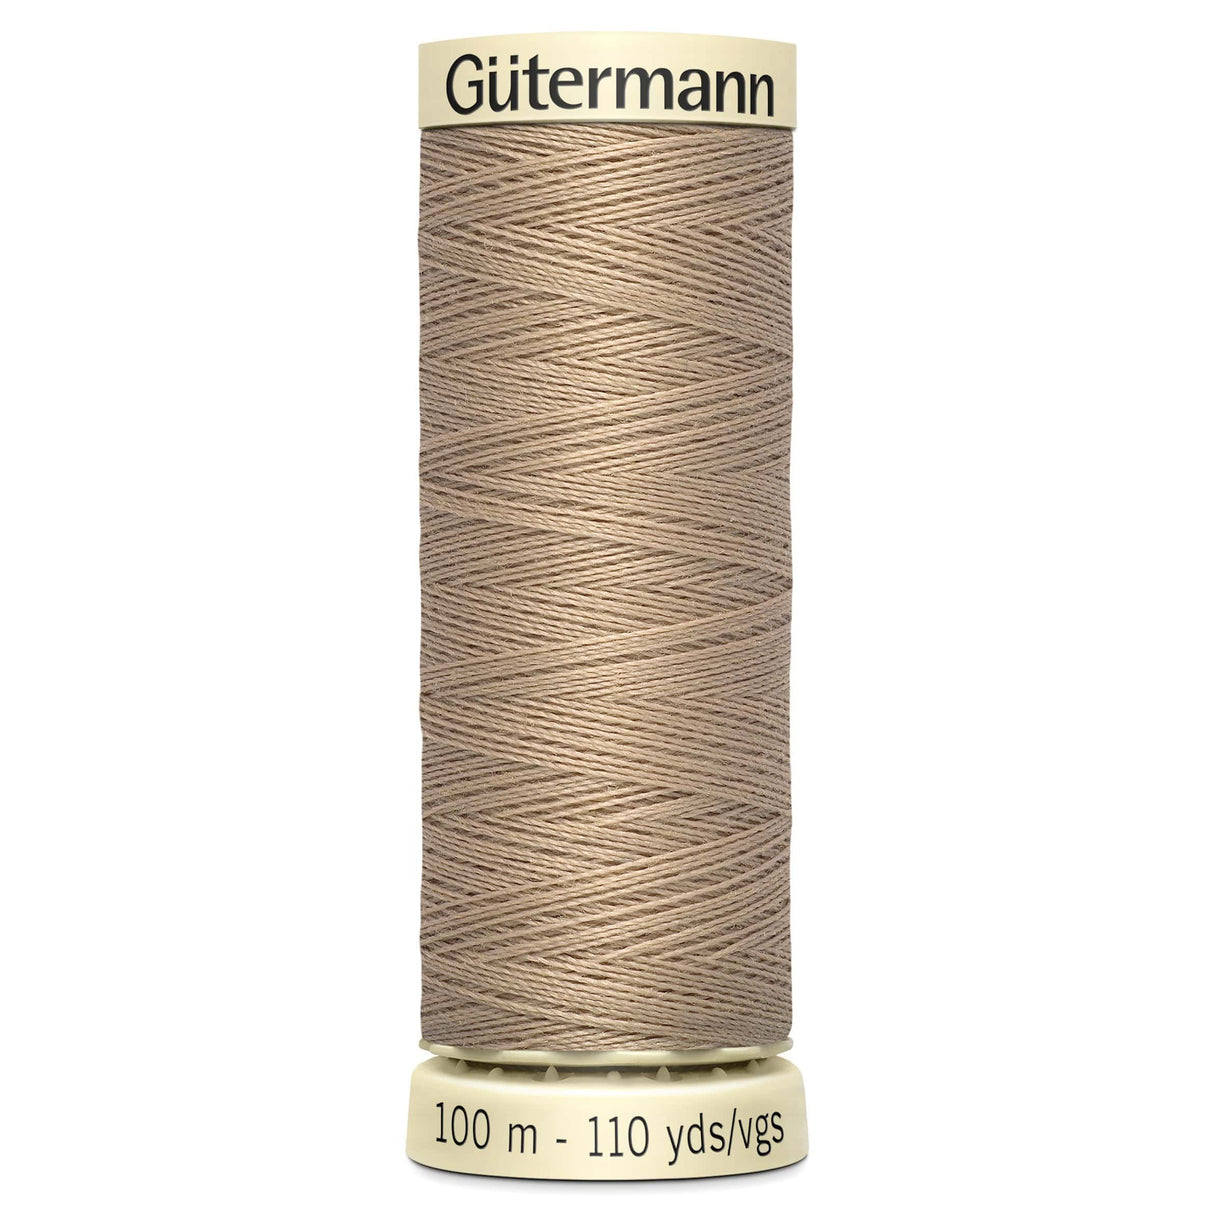 Groves Haberdashery 215 Gutermann Thread Sewing Cotton 100 m Black to Pink